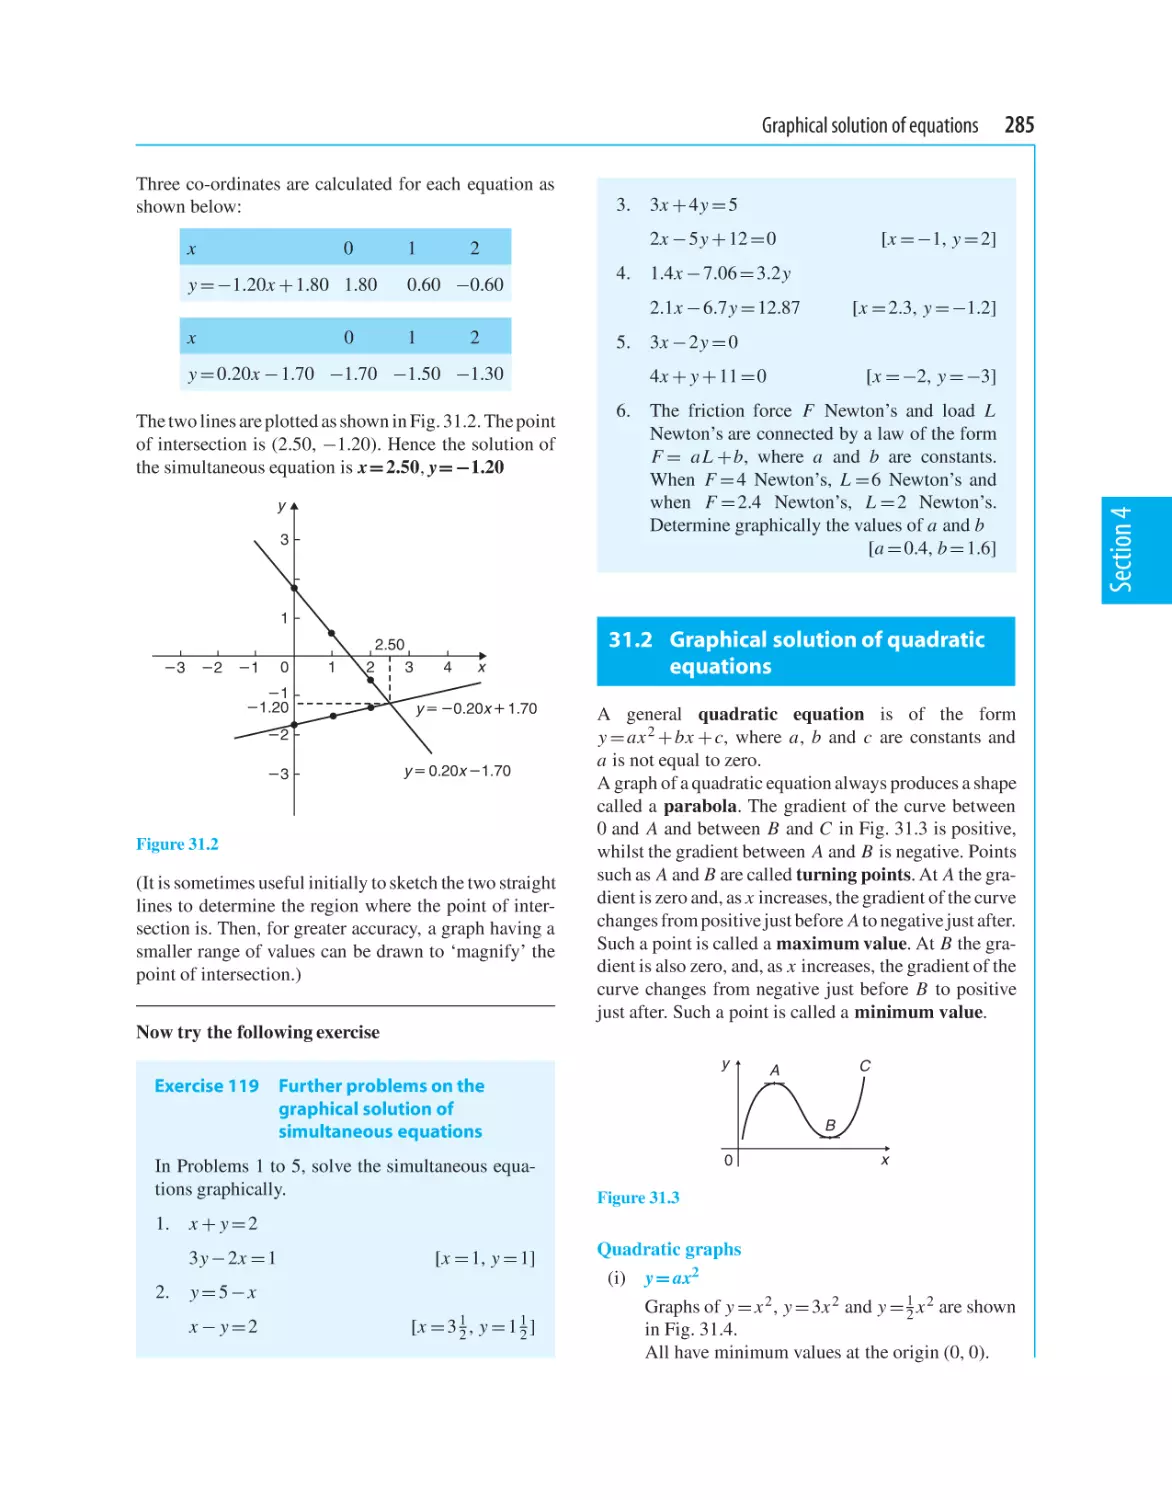 31.2 Graphical solution of quadratic equations